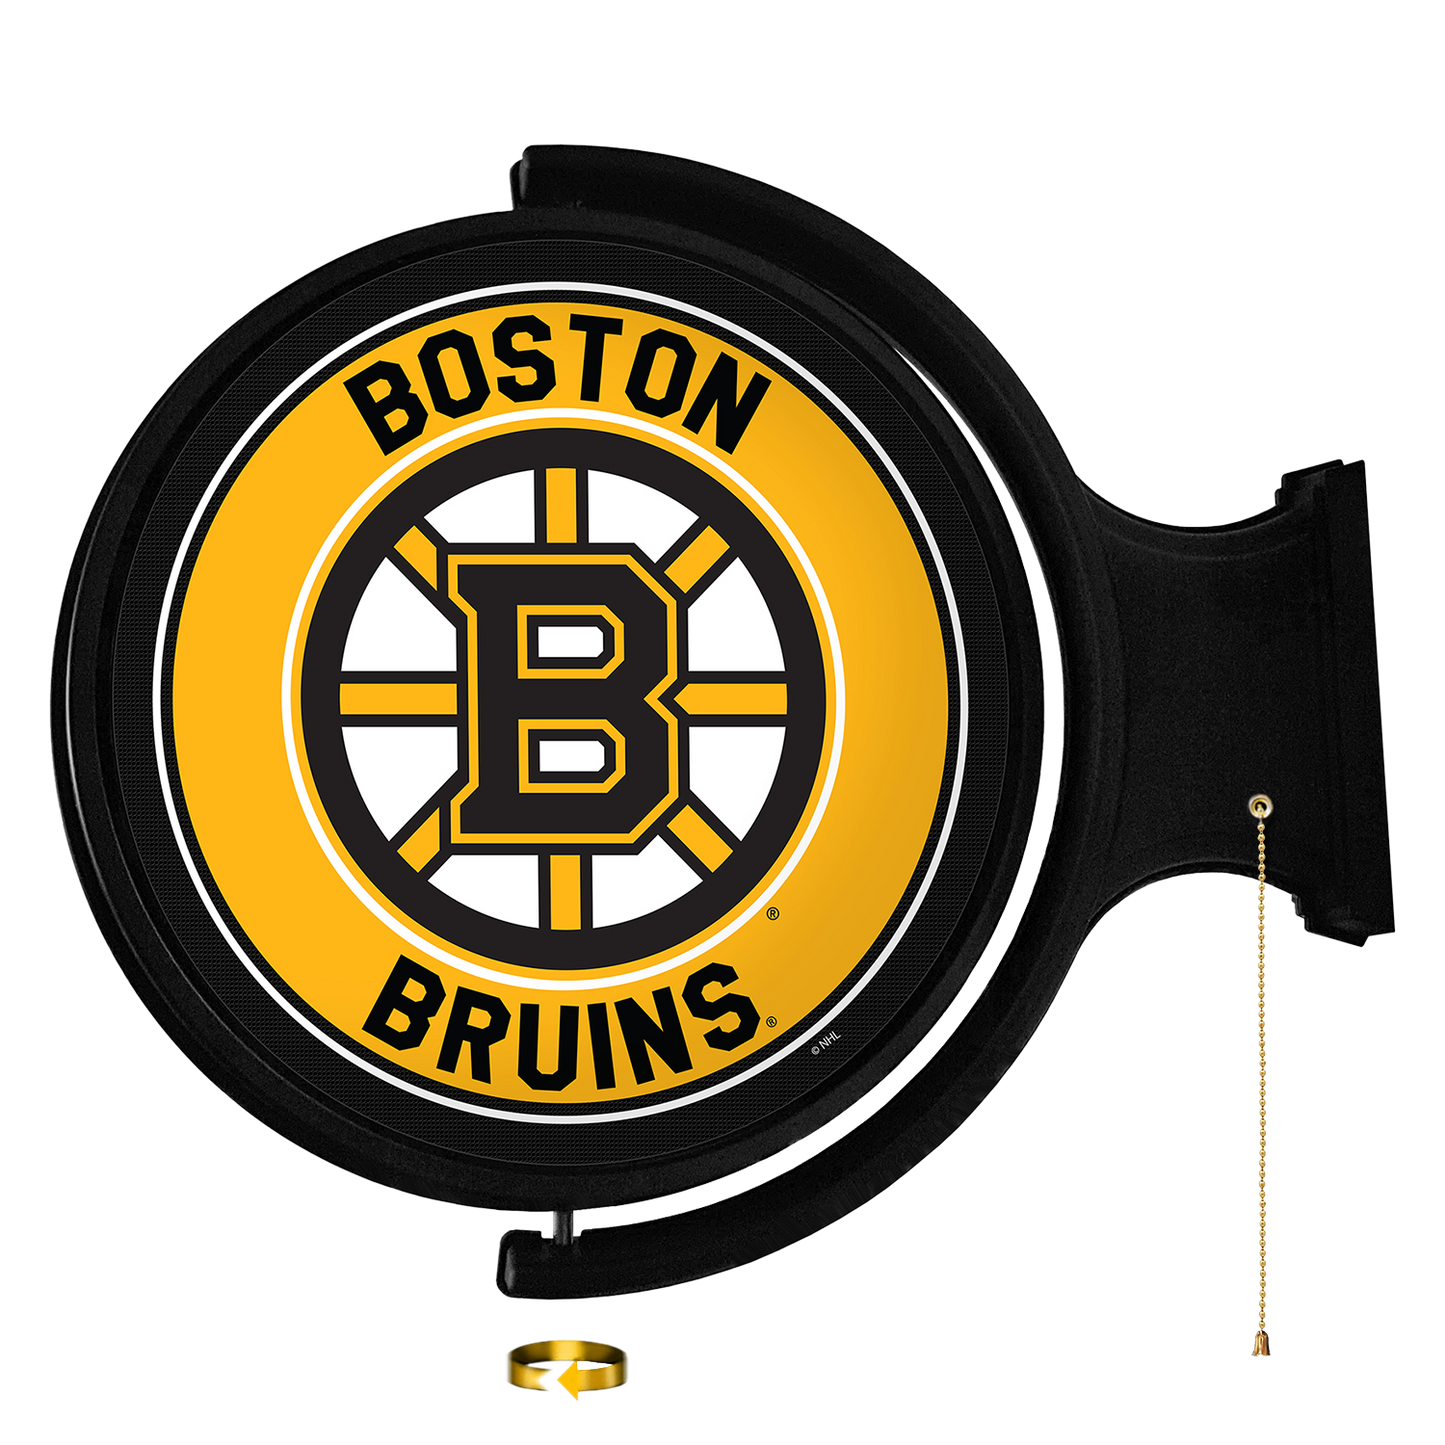 Boston Bruins Round Rotating Wall Sign